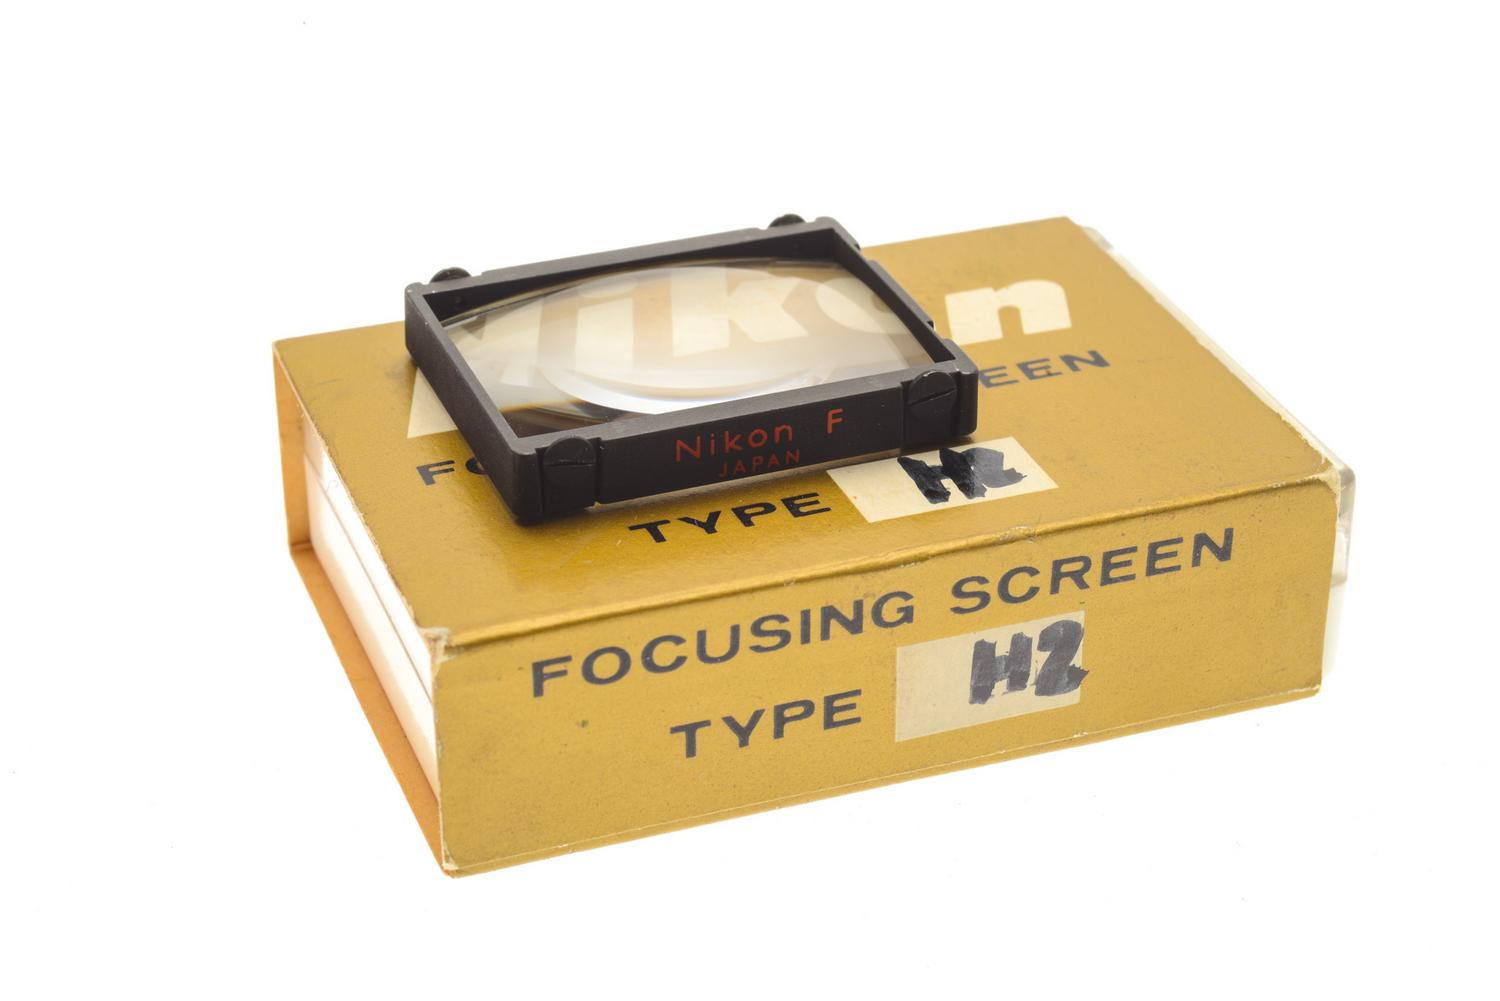 Nikon Focusing Screen Type H2 for F & F2 - Accessory